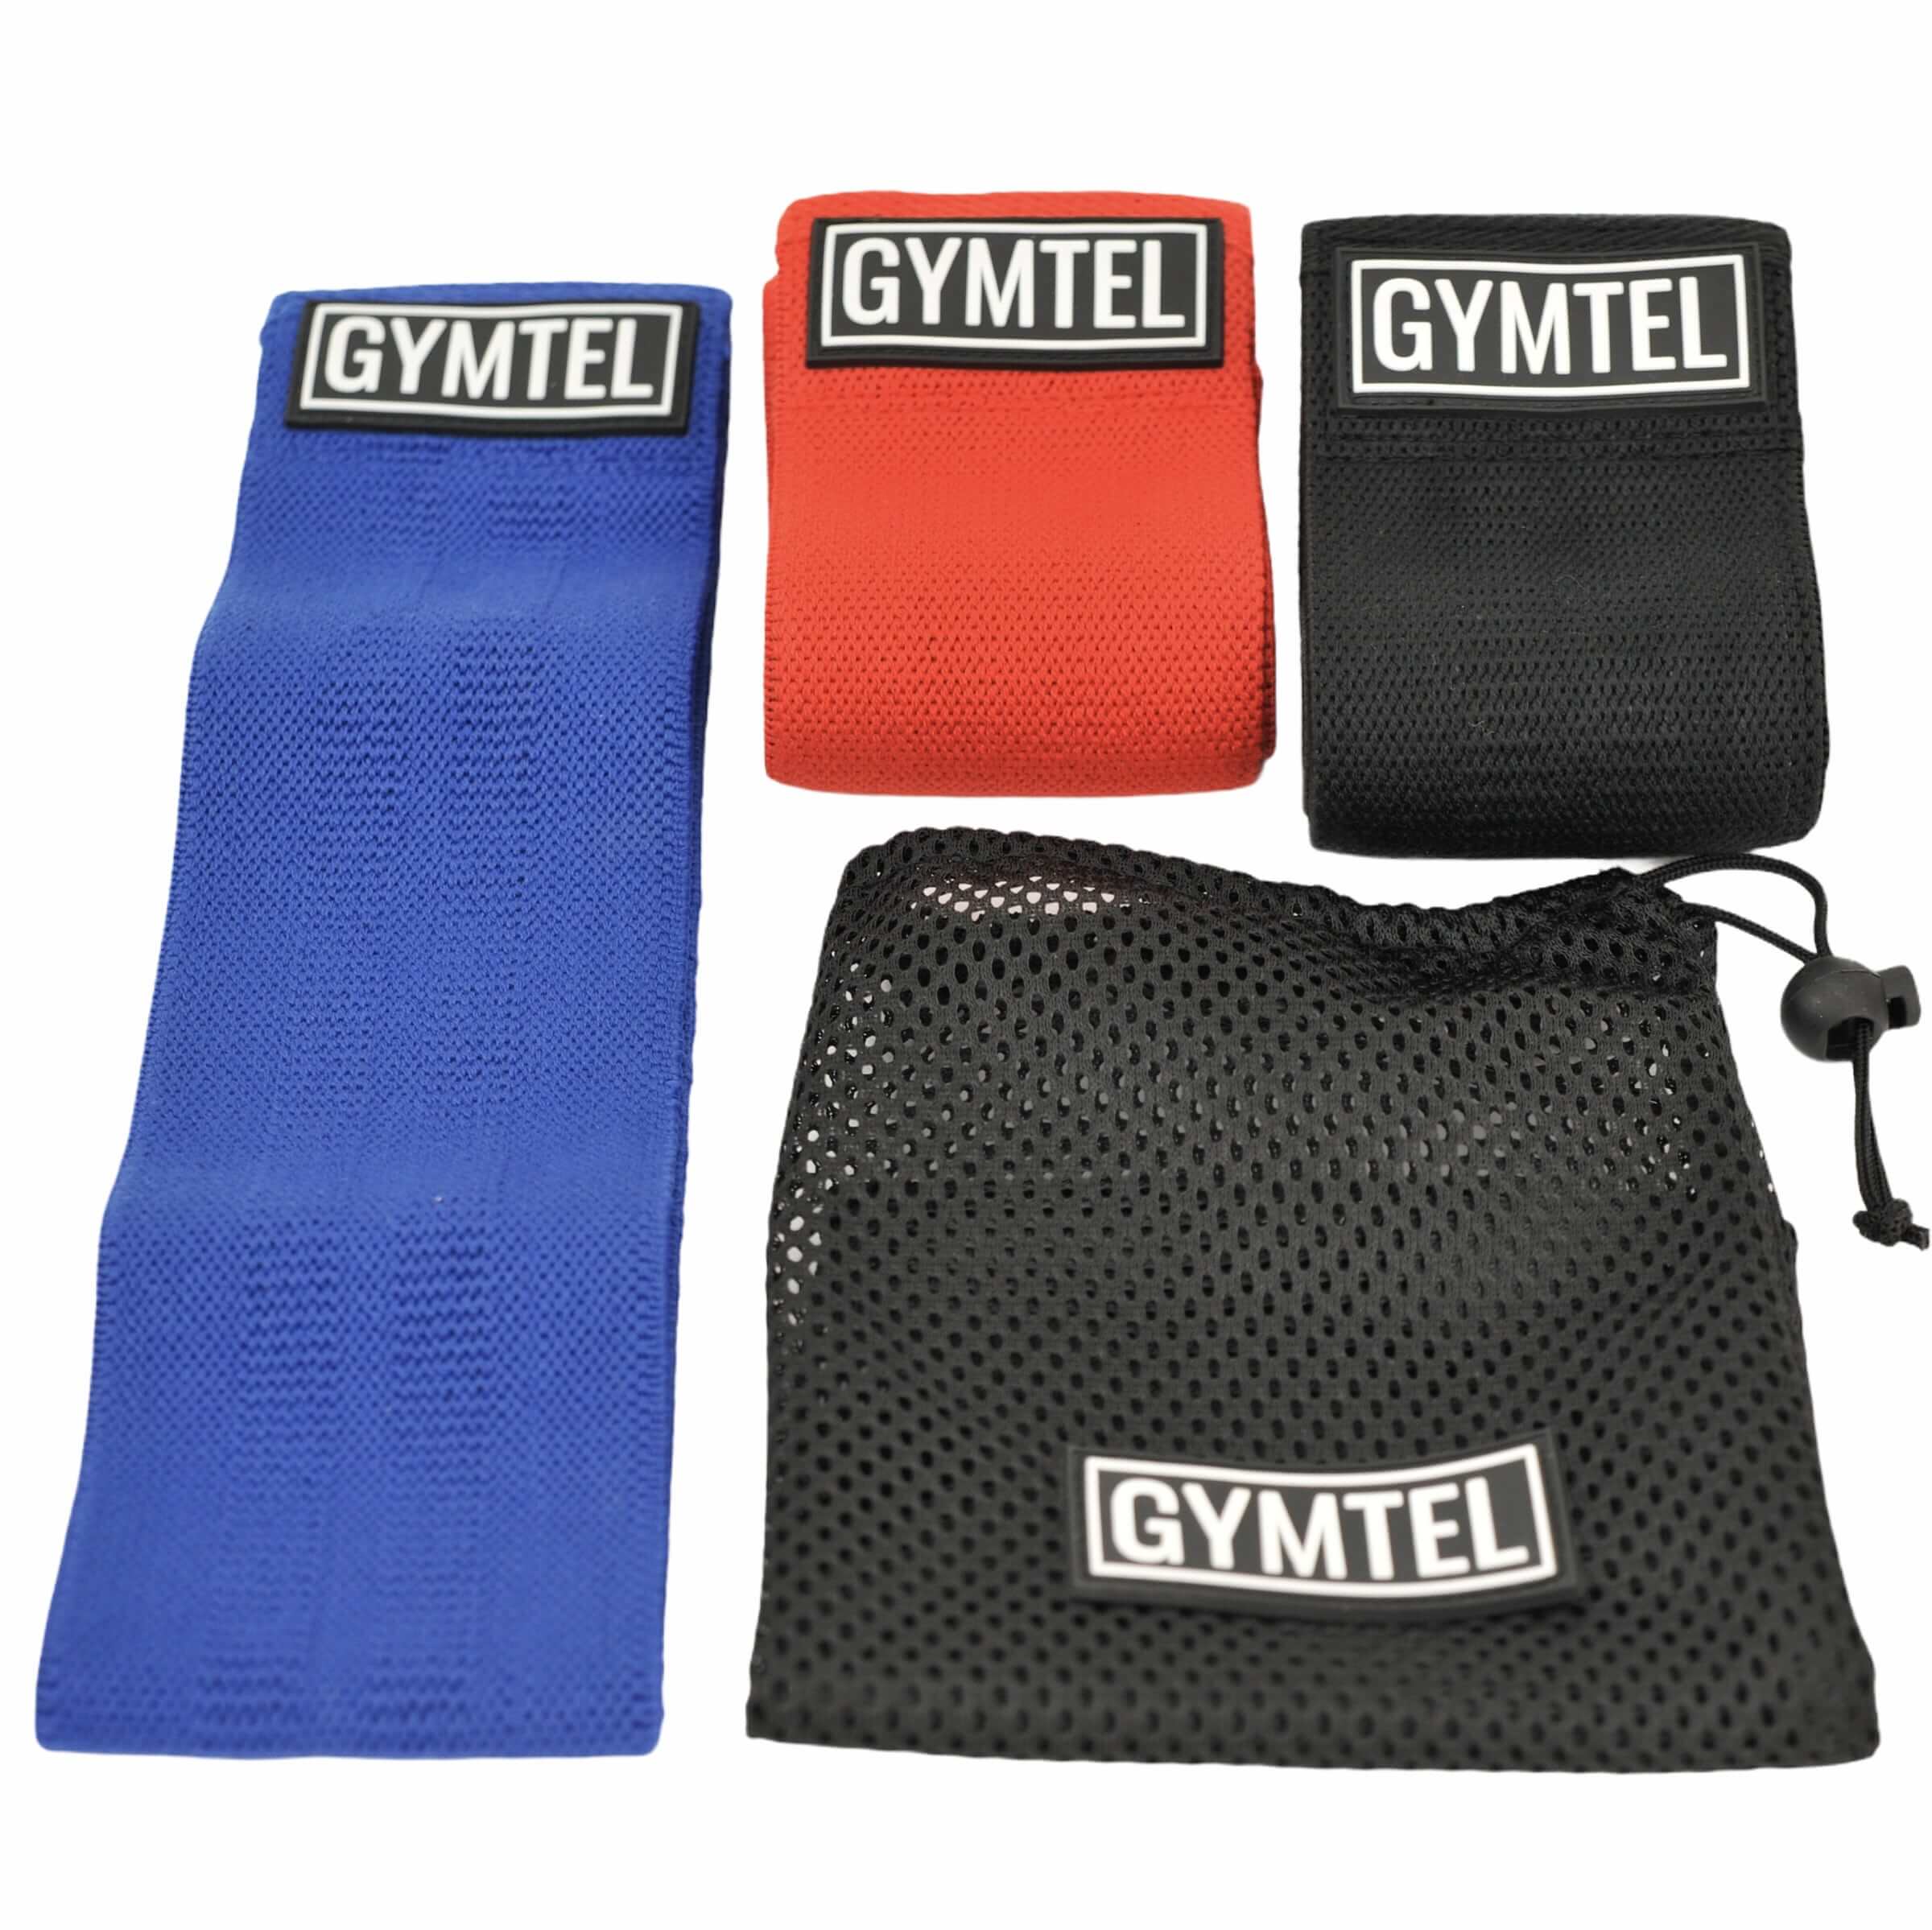 https://gymtel.fitness/wp-content/uploads/2021/03/Fitness-Pack-Rental-Gymtel-8.jpg